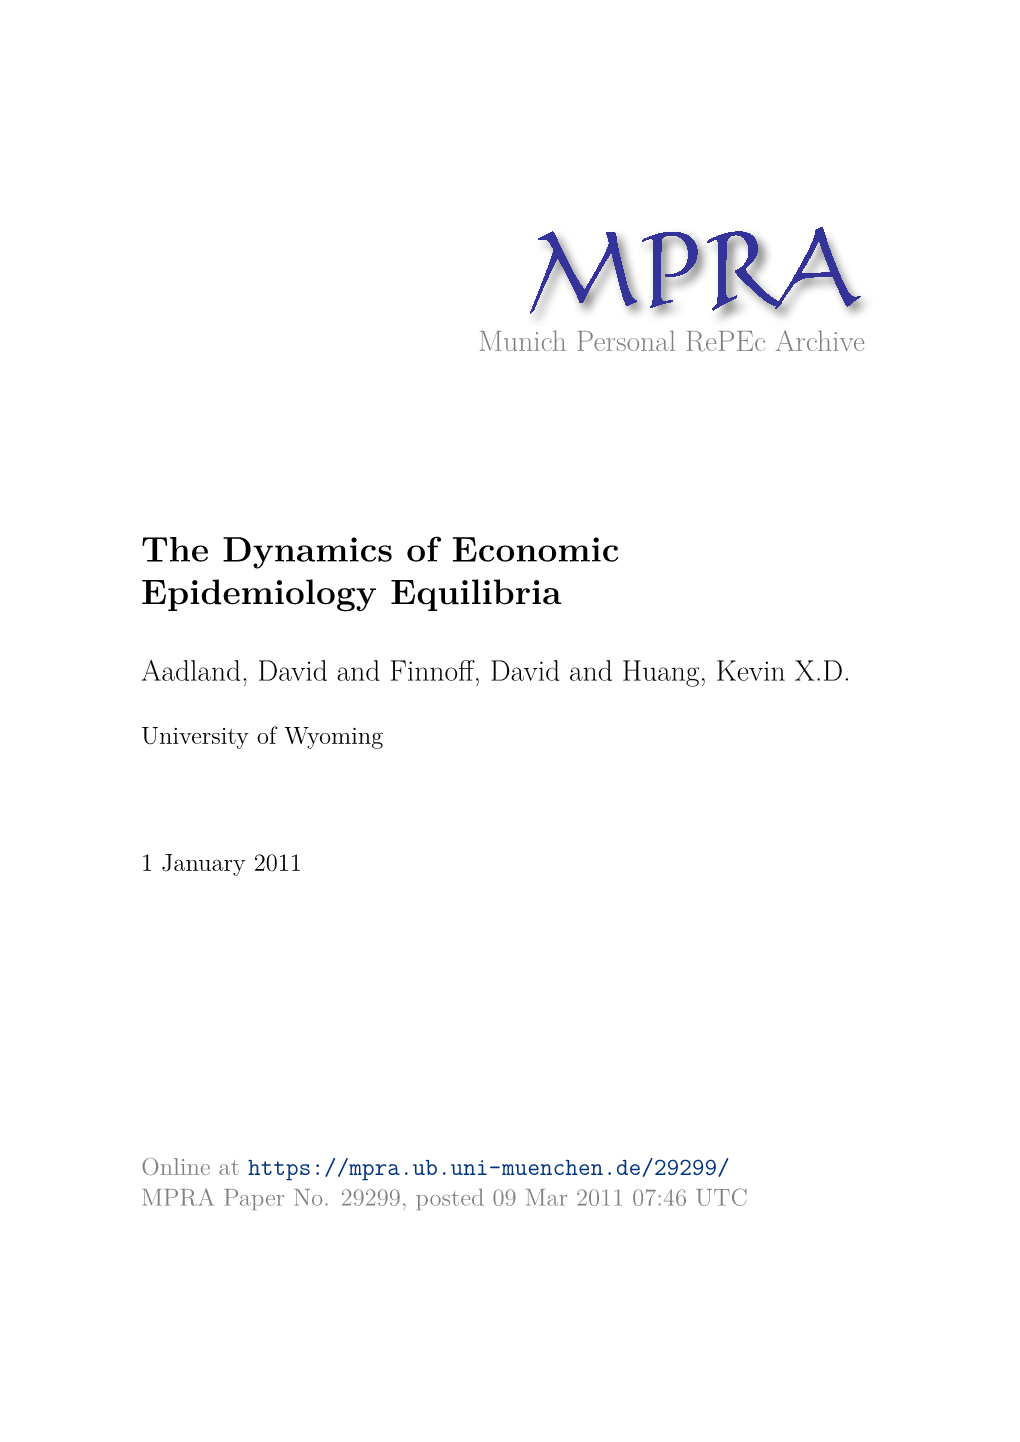 The Dynamics of Economic Epidemiology Equilibria